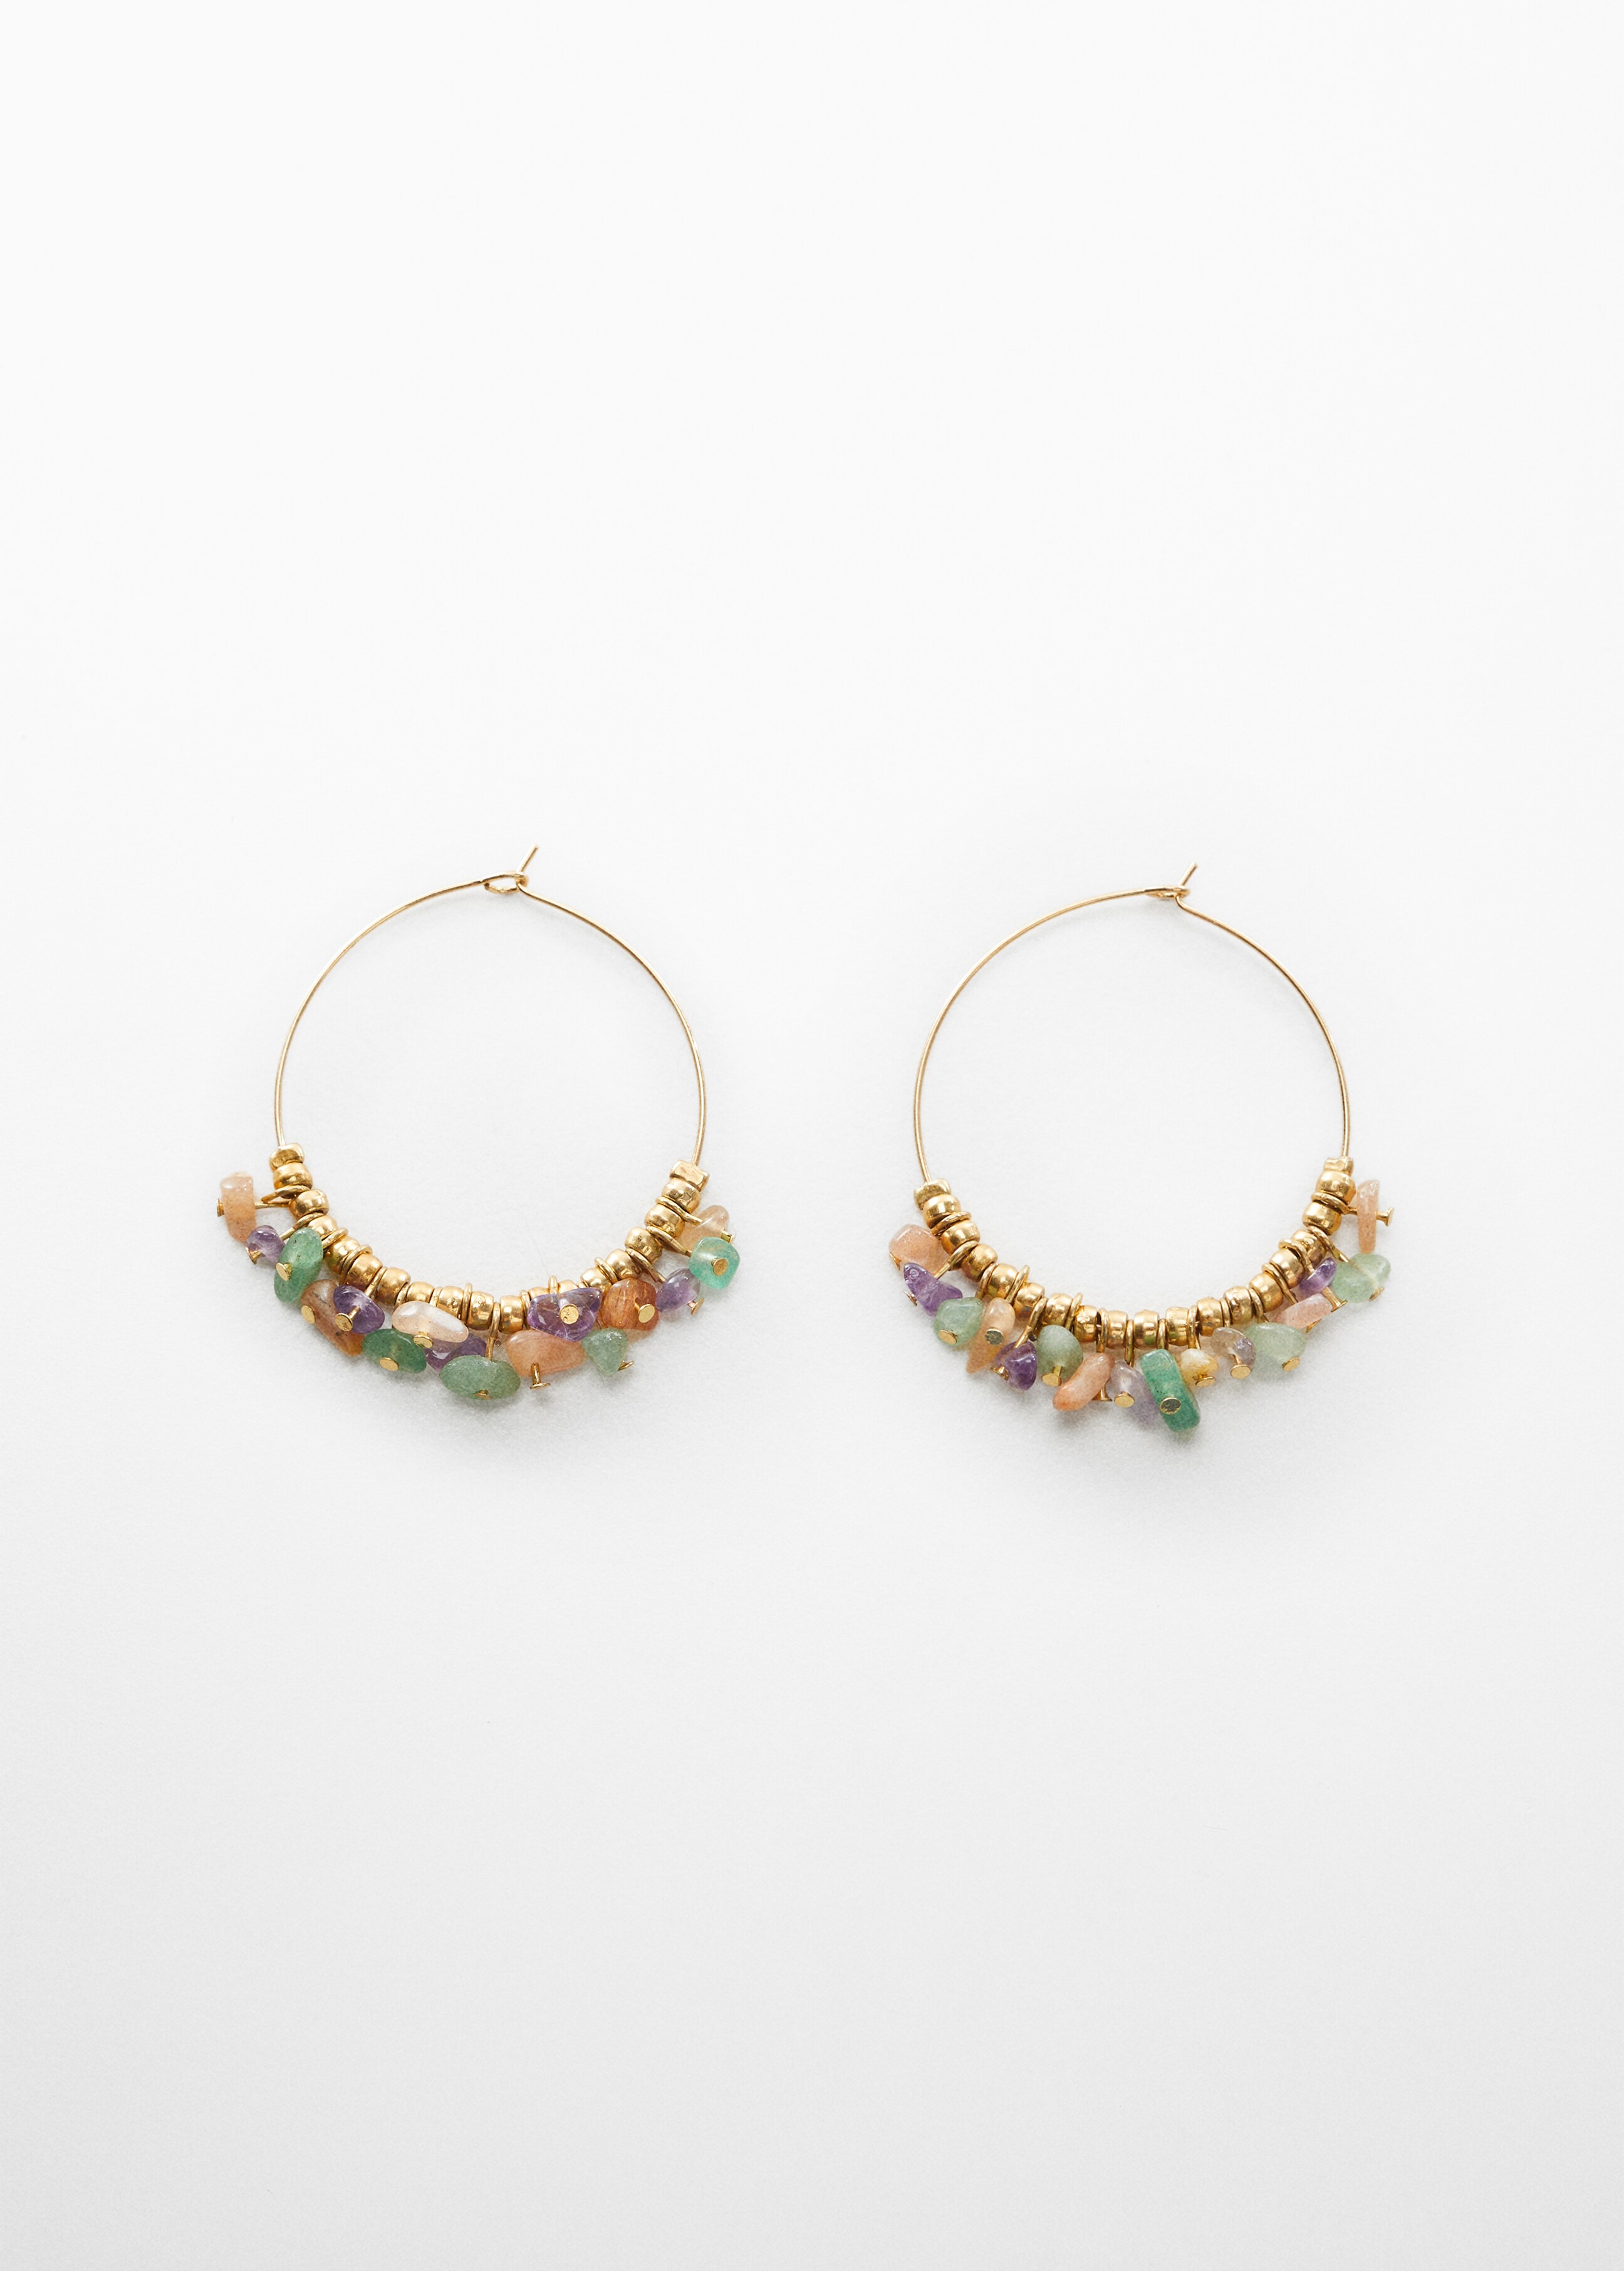 Bead loop earrings - Article without model